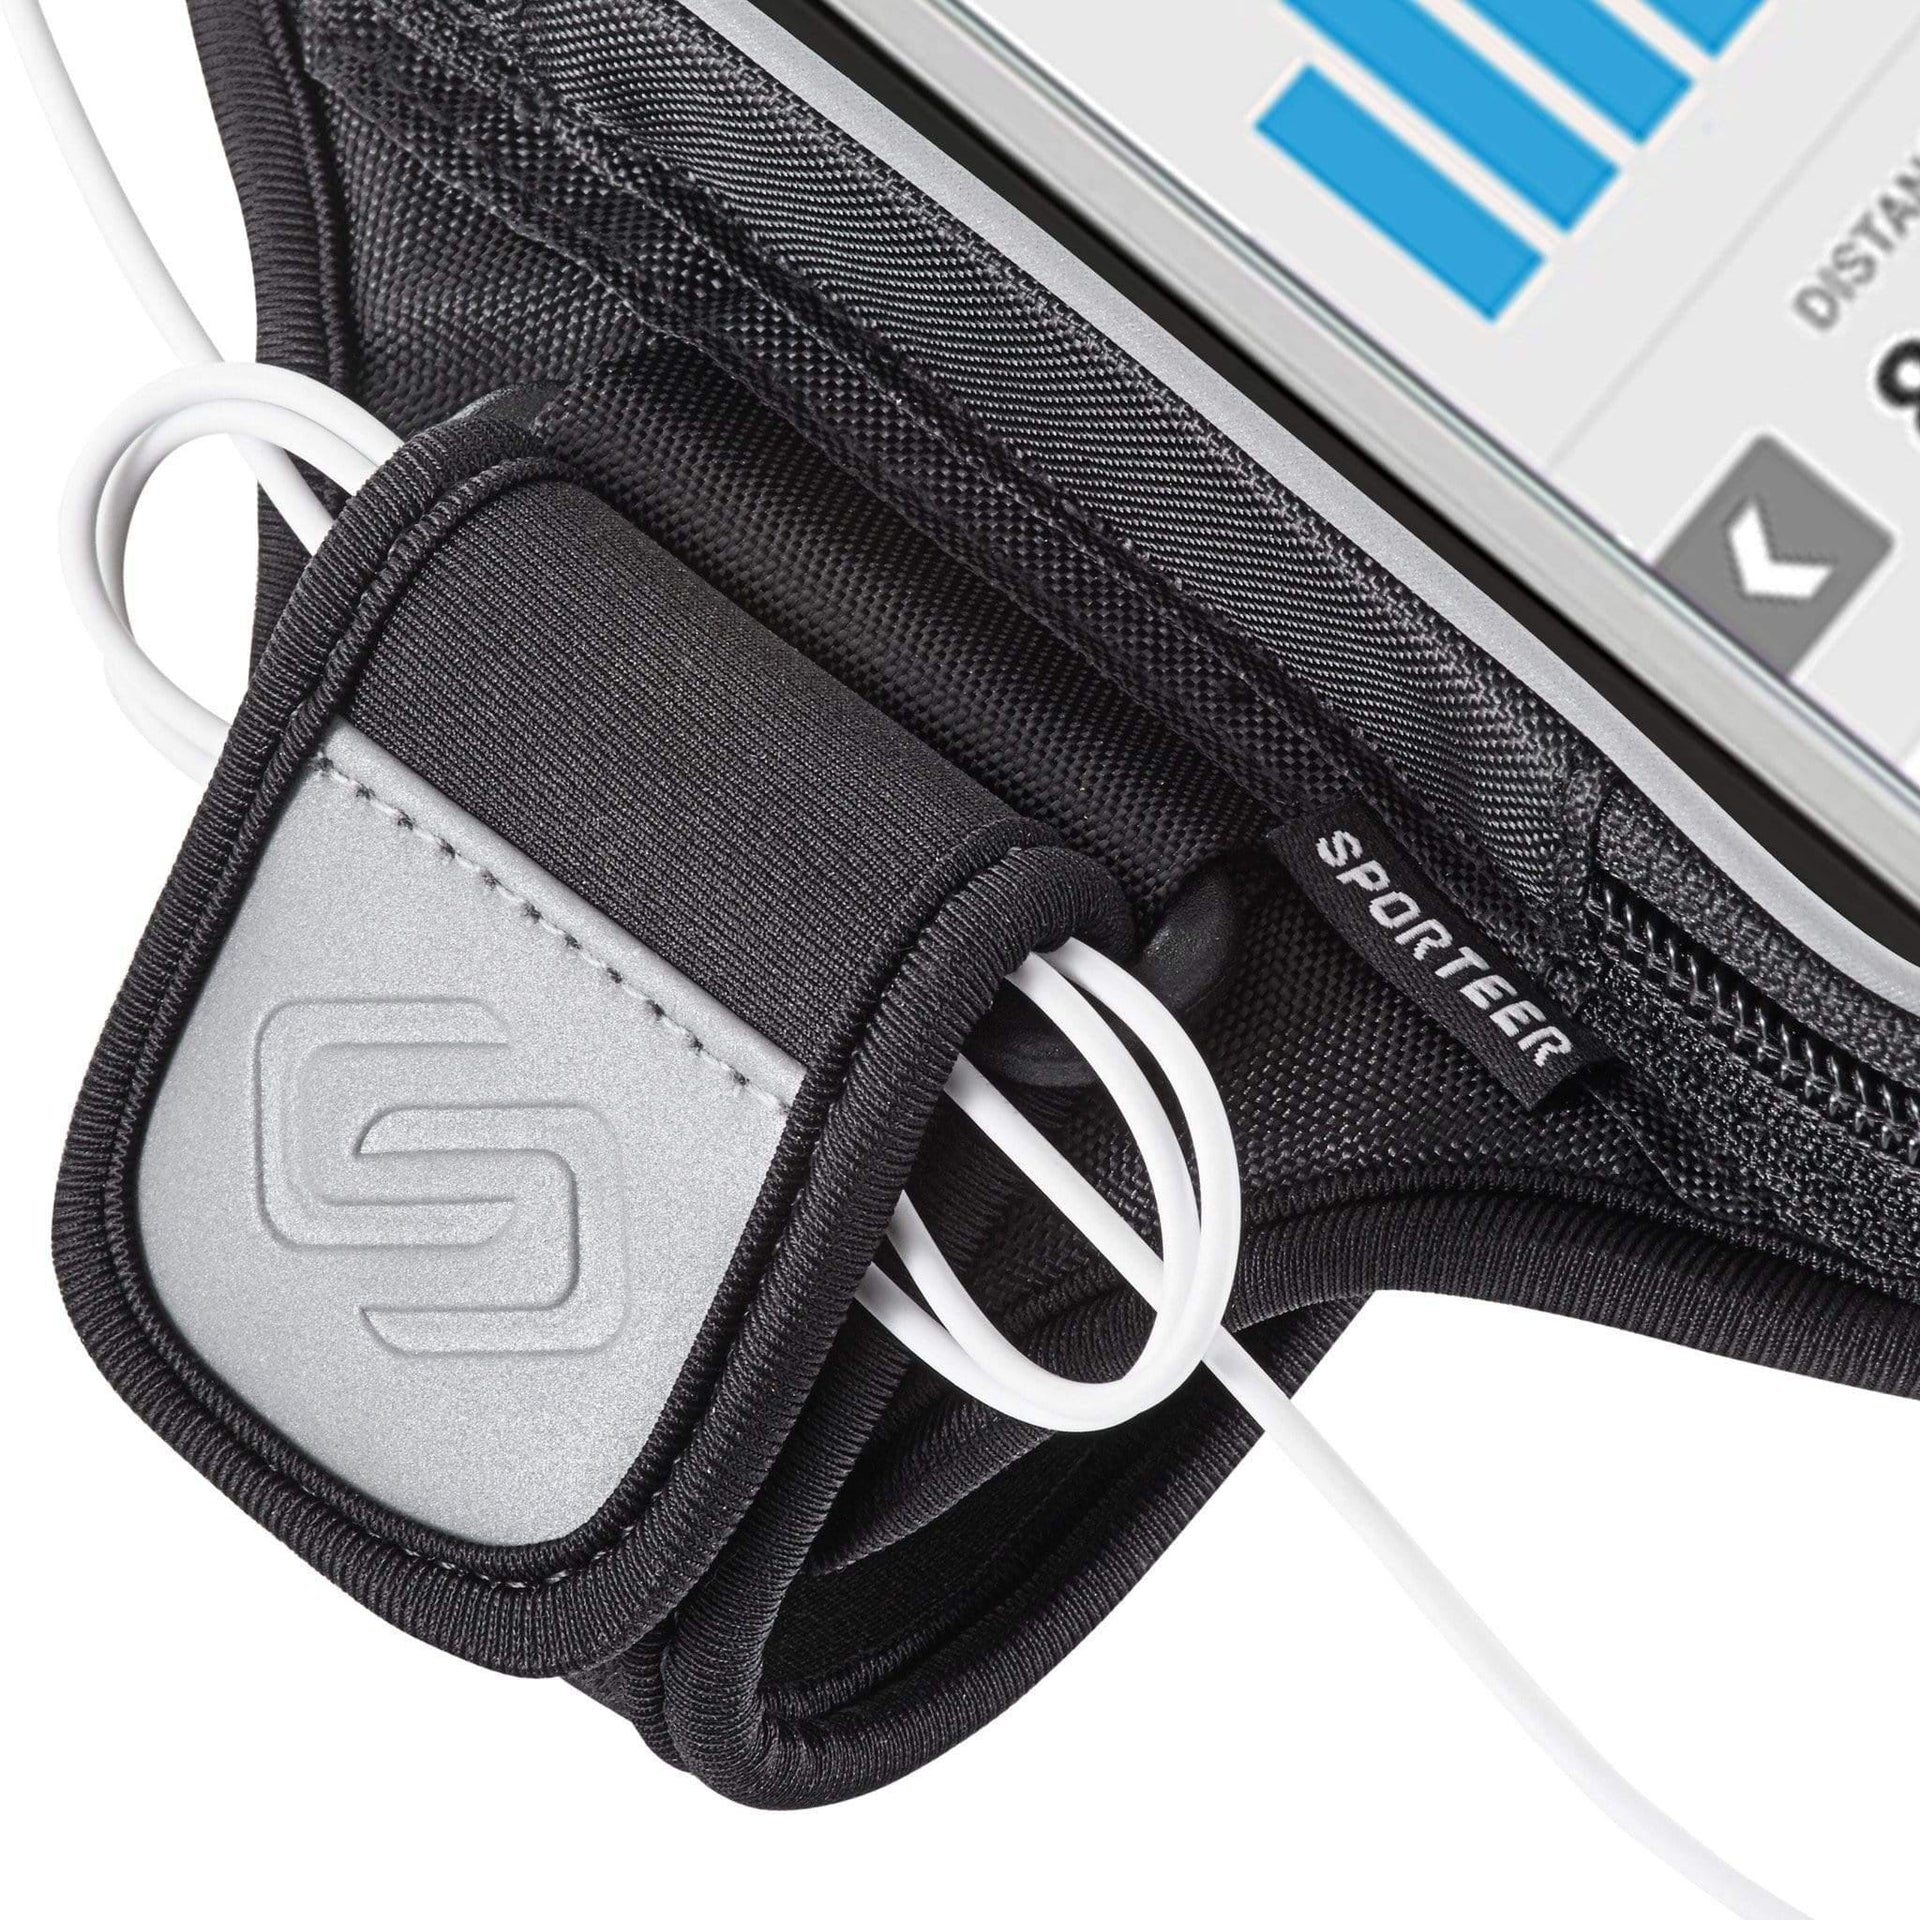 Sporteer Entropy E8 Modular Armband for Samsung Galaxy phones with cord strap